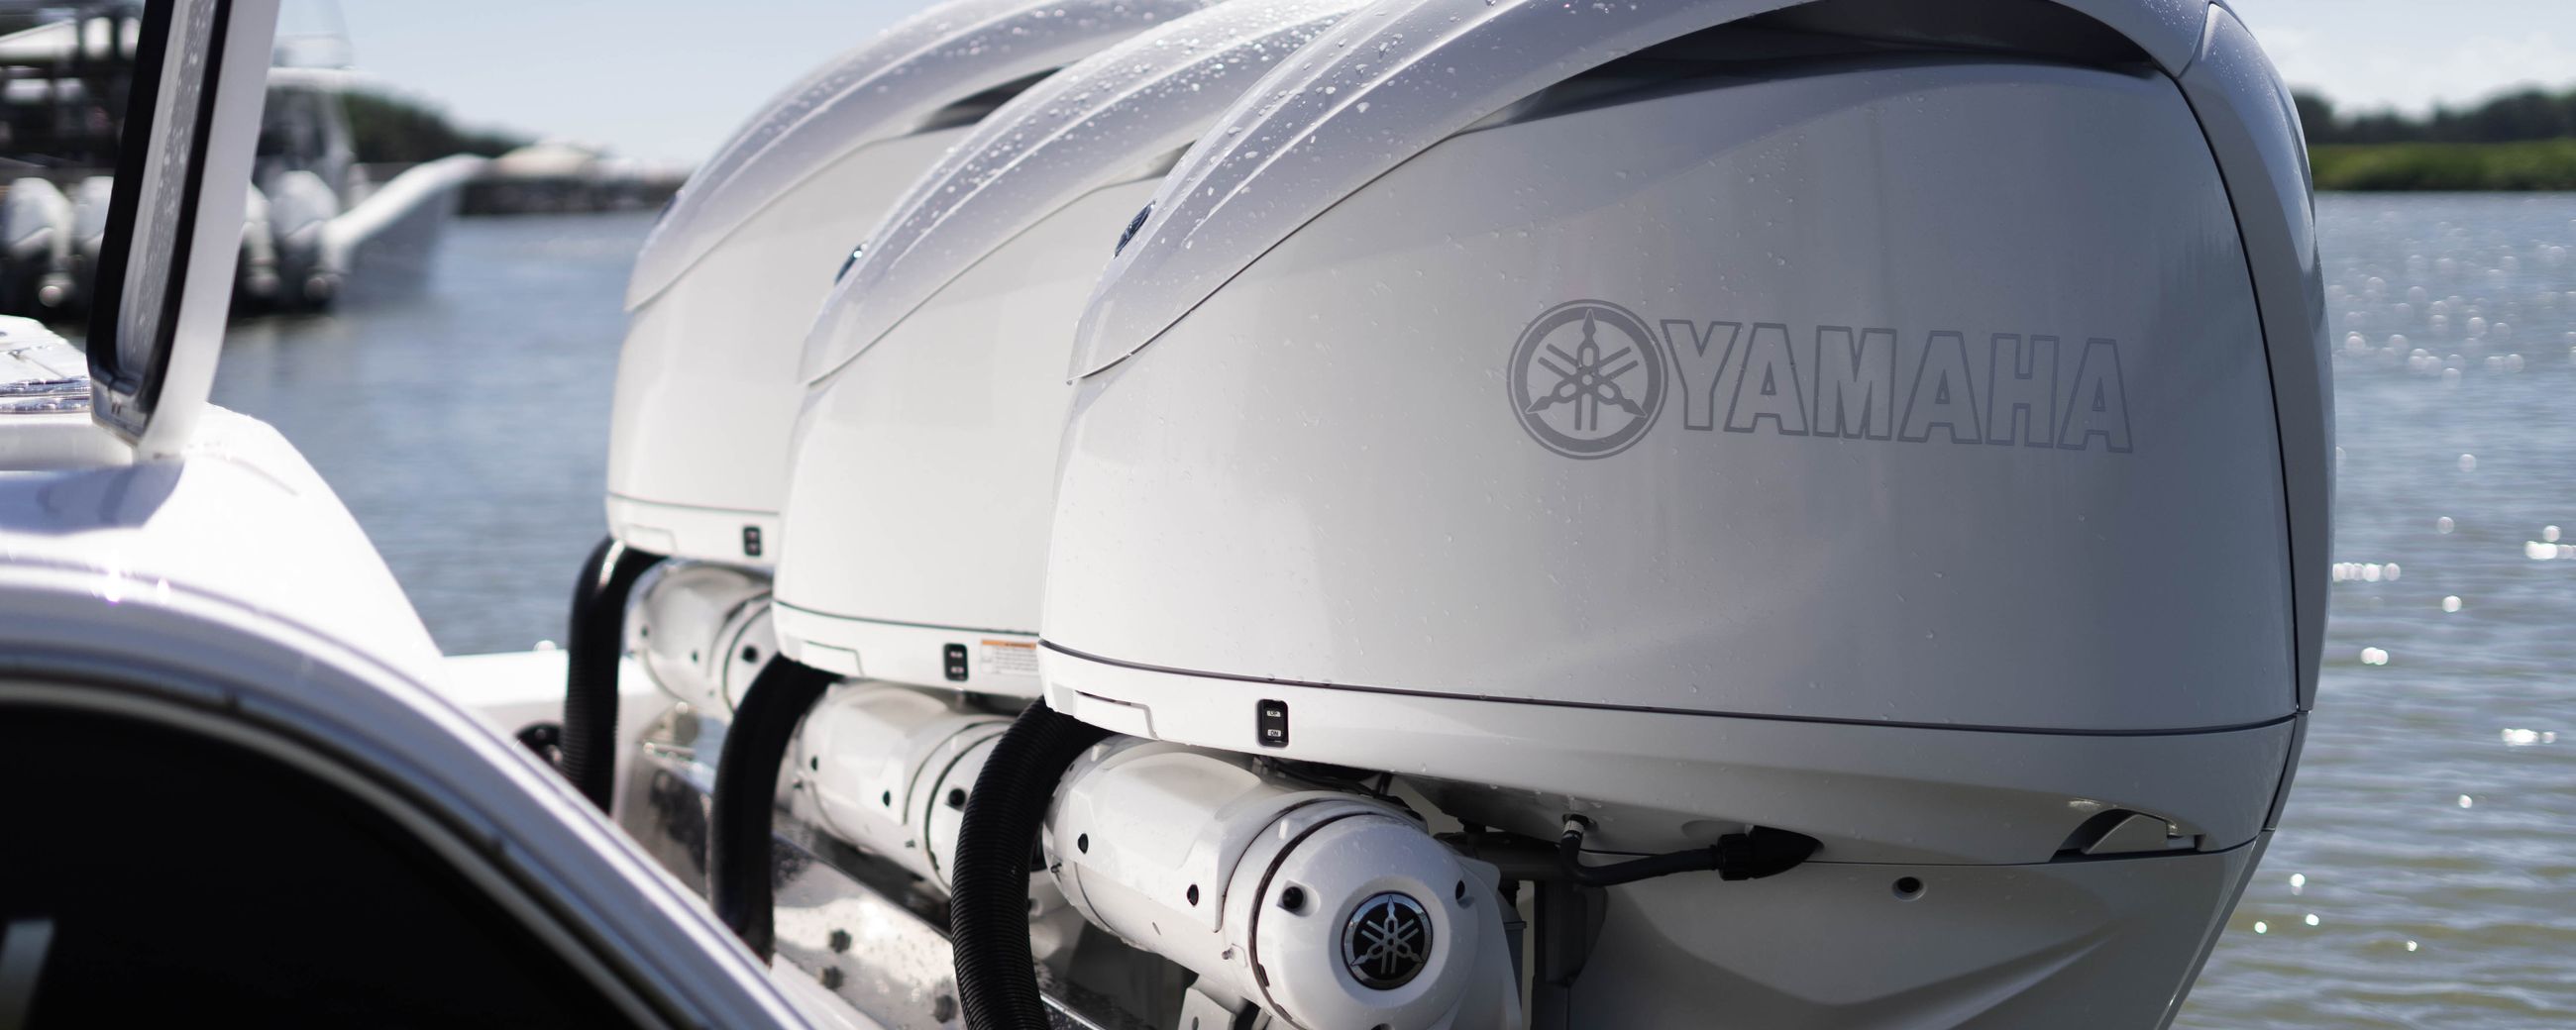 Yamaha engines on a Sportsman Boat